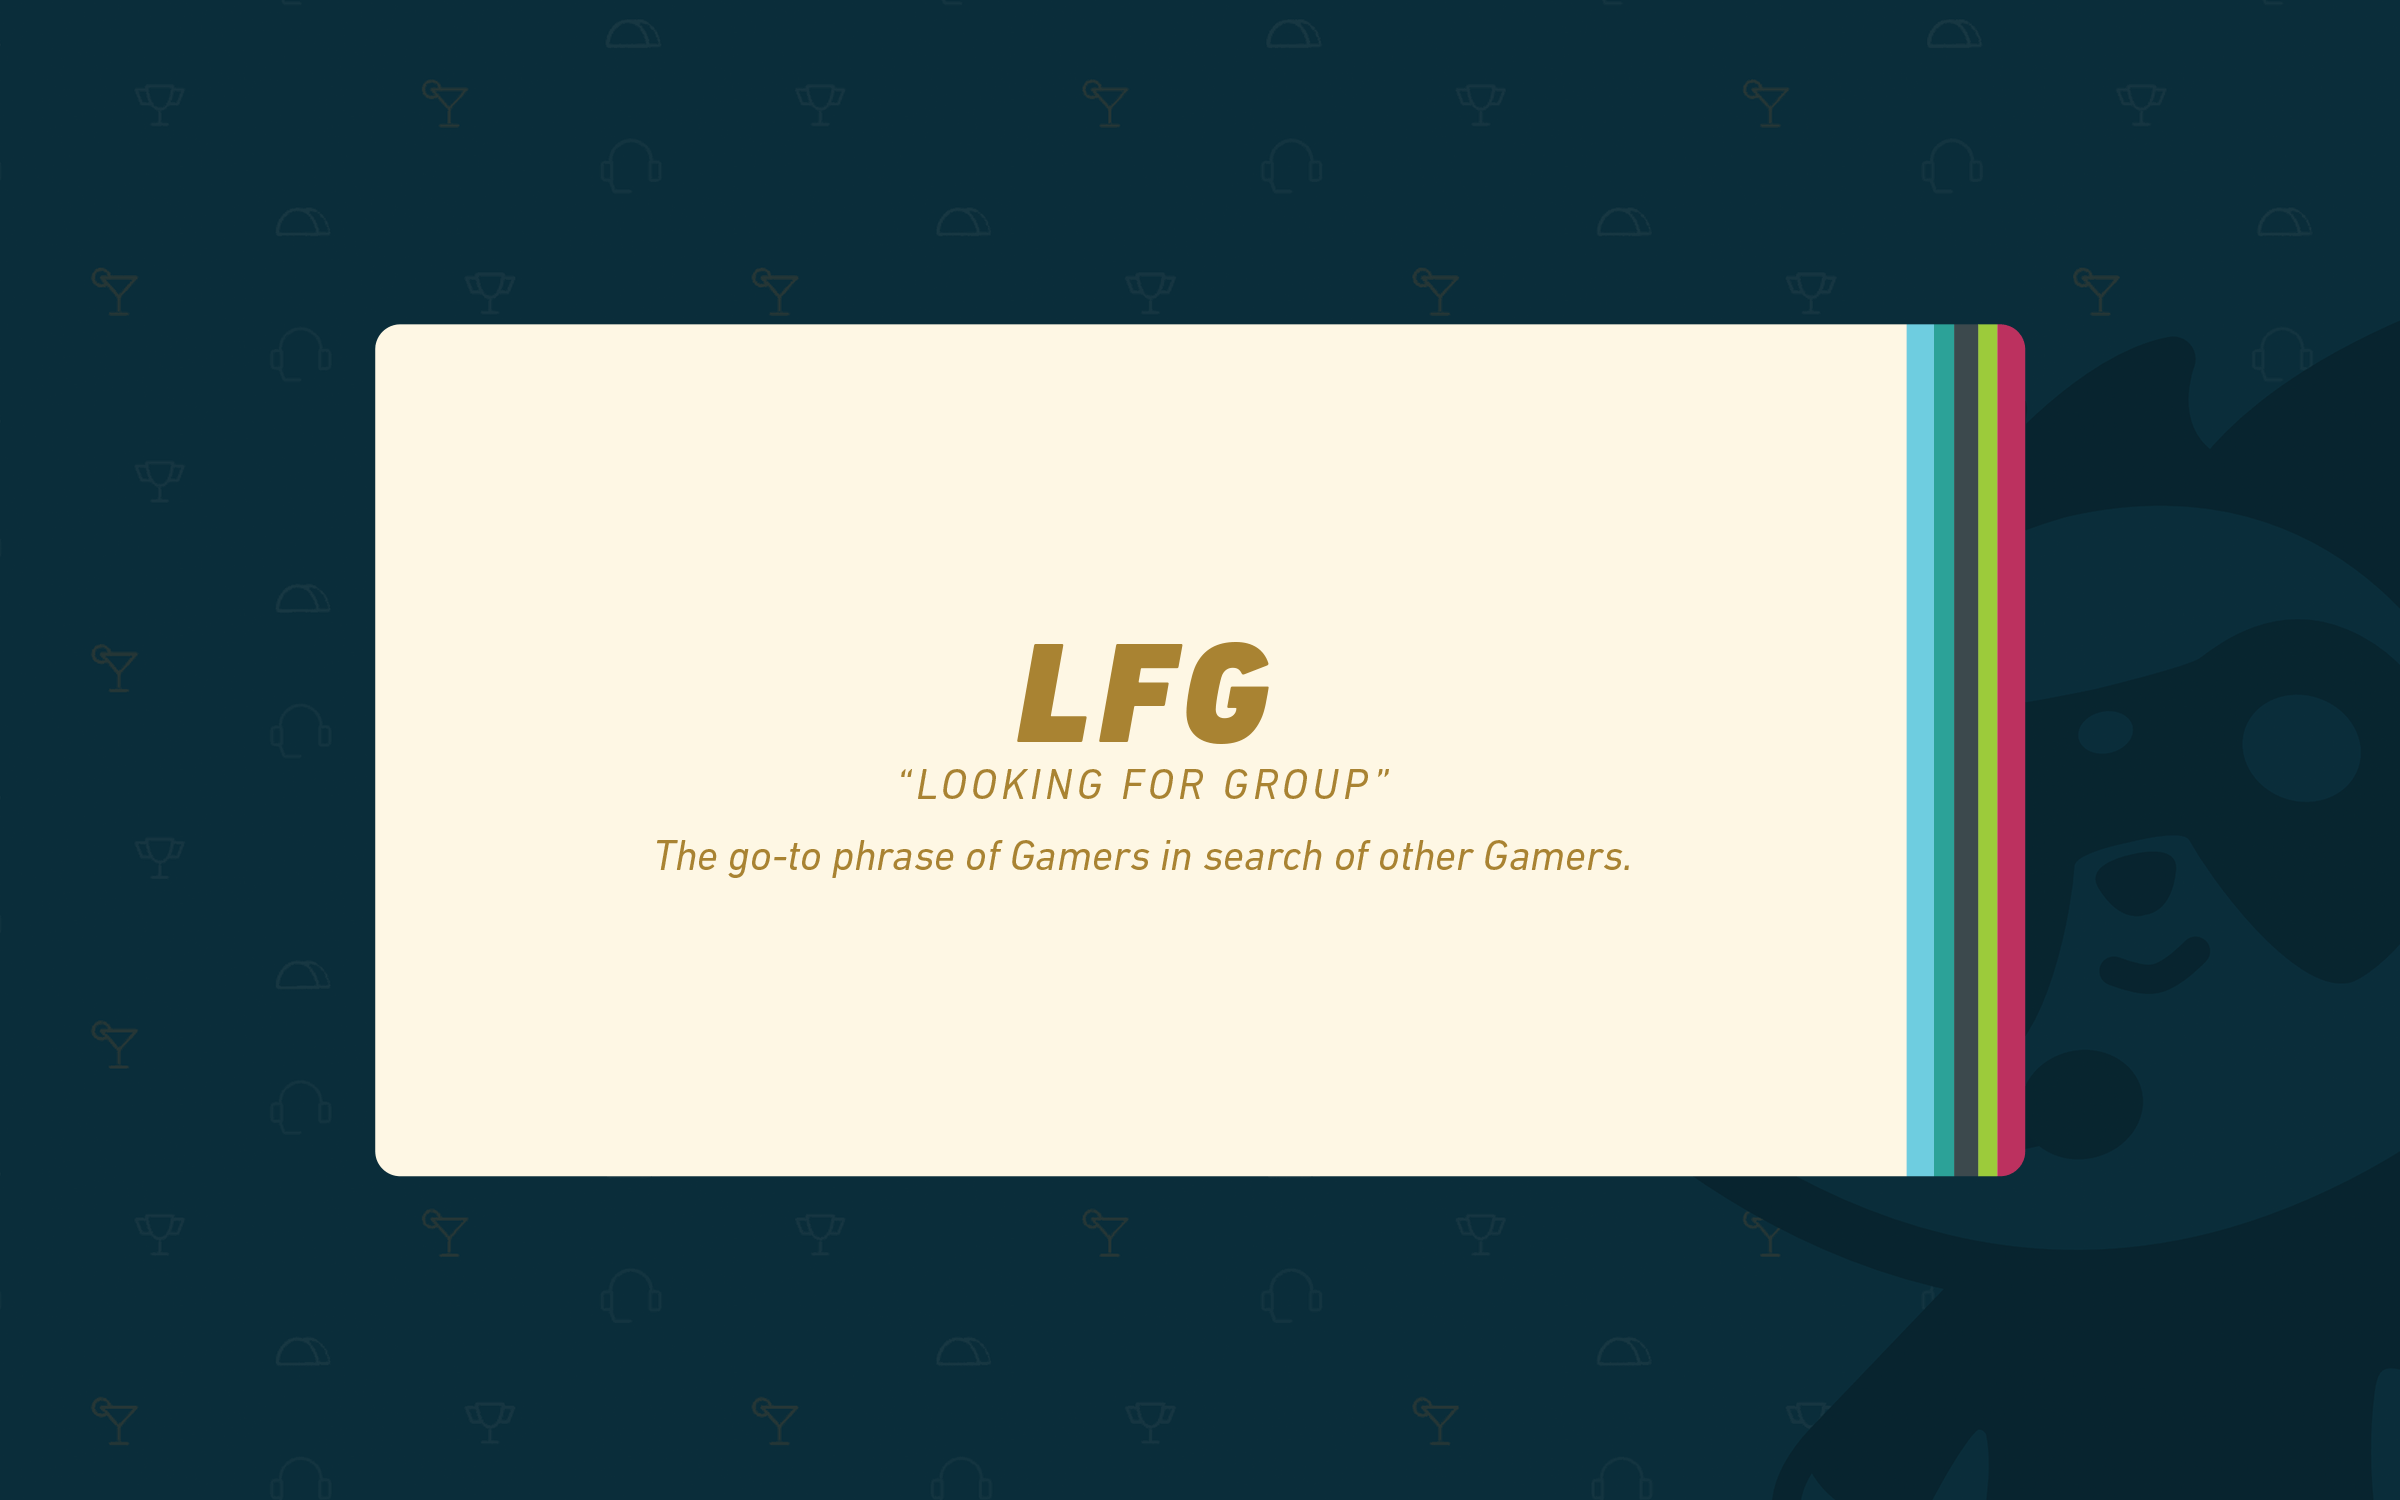 LFG definition